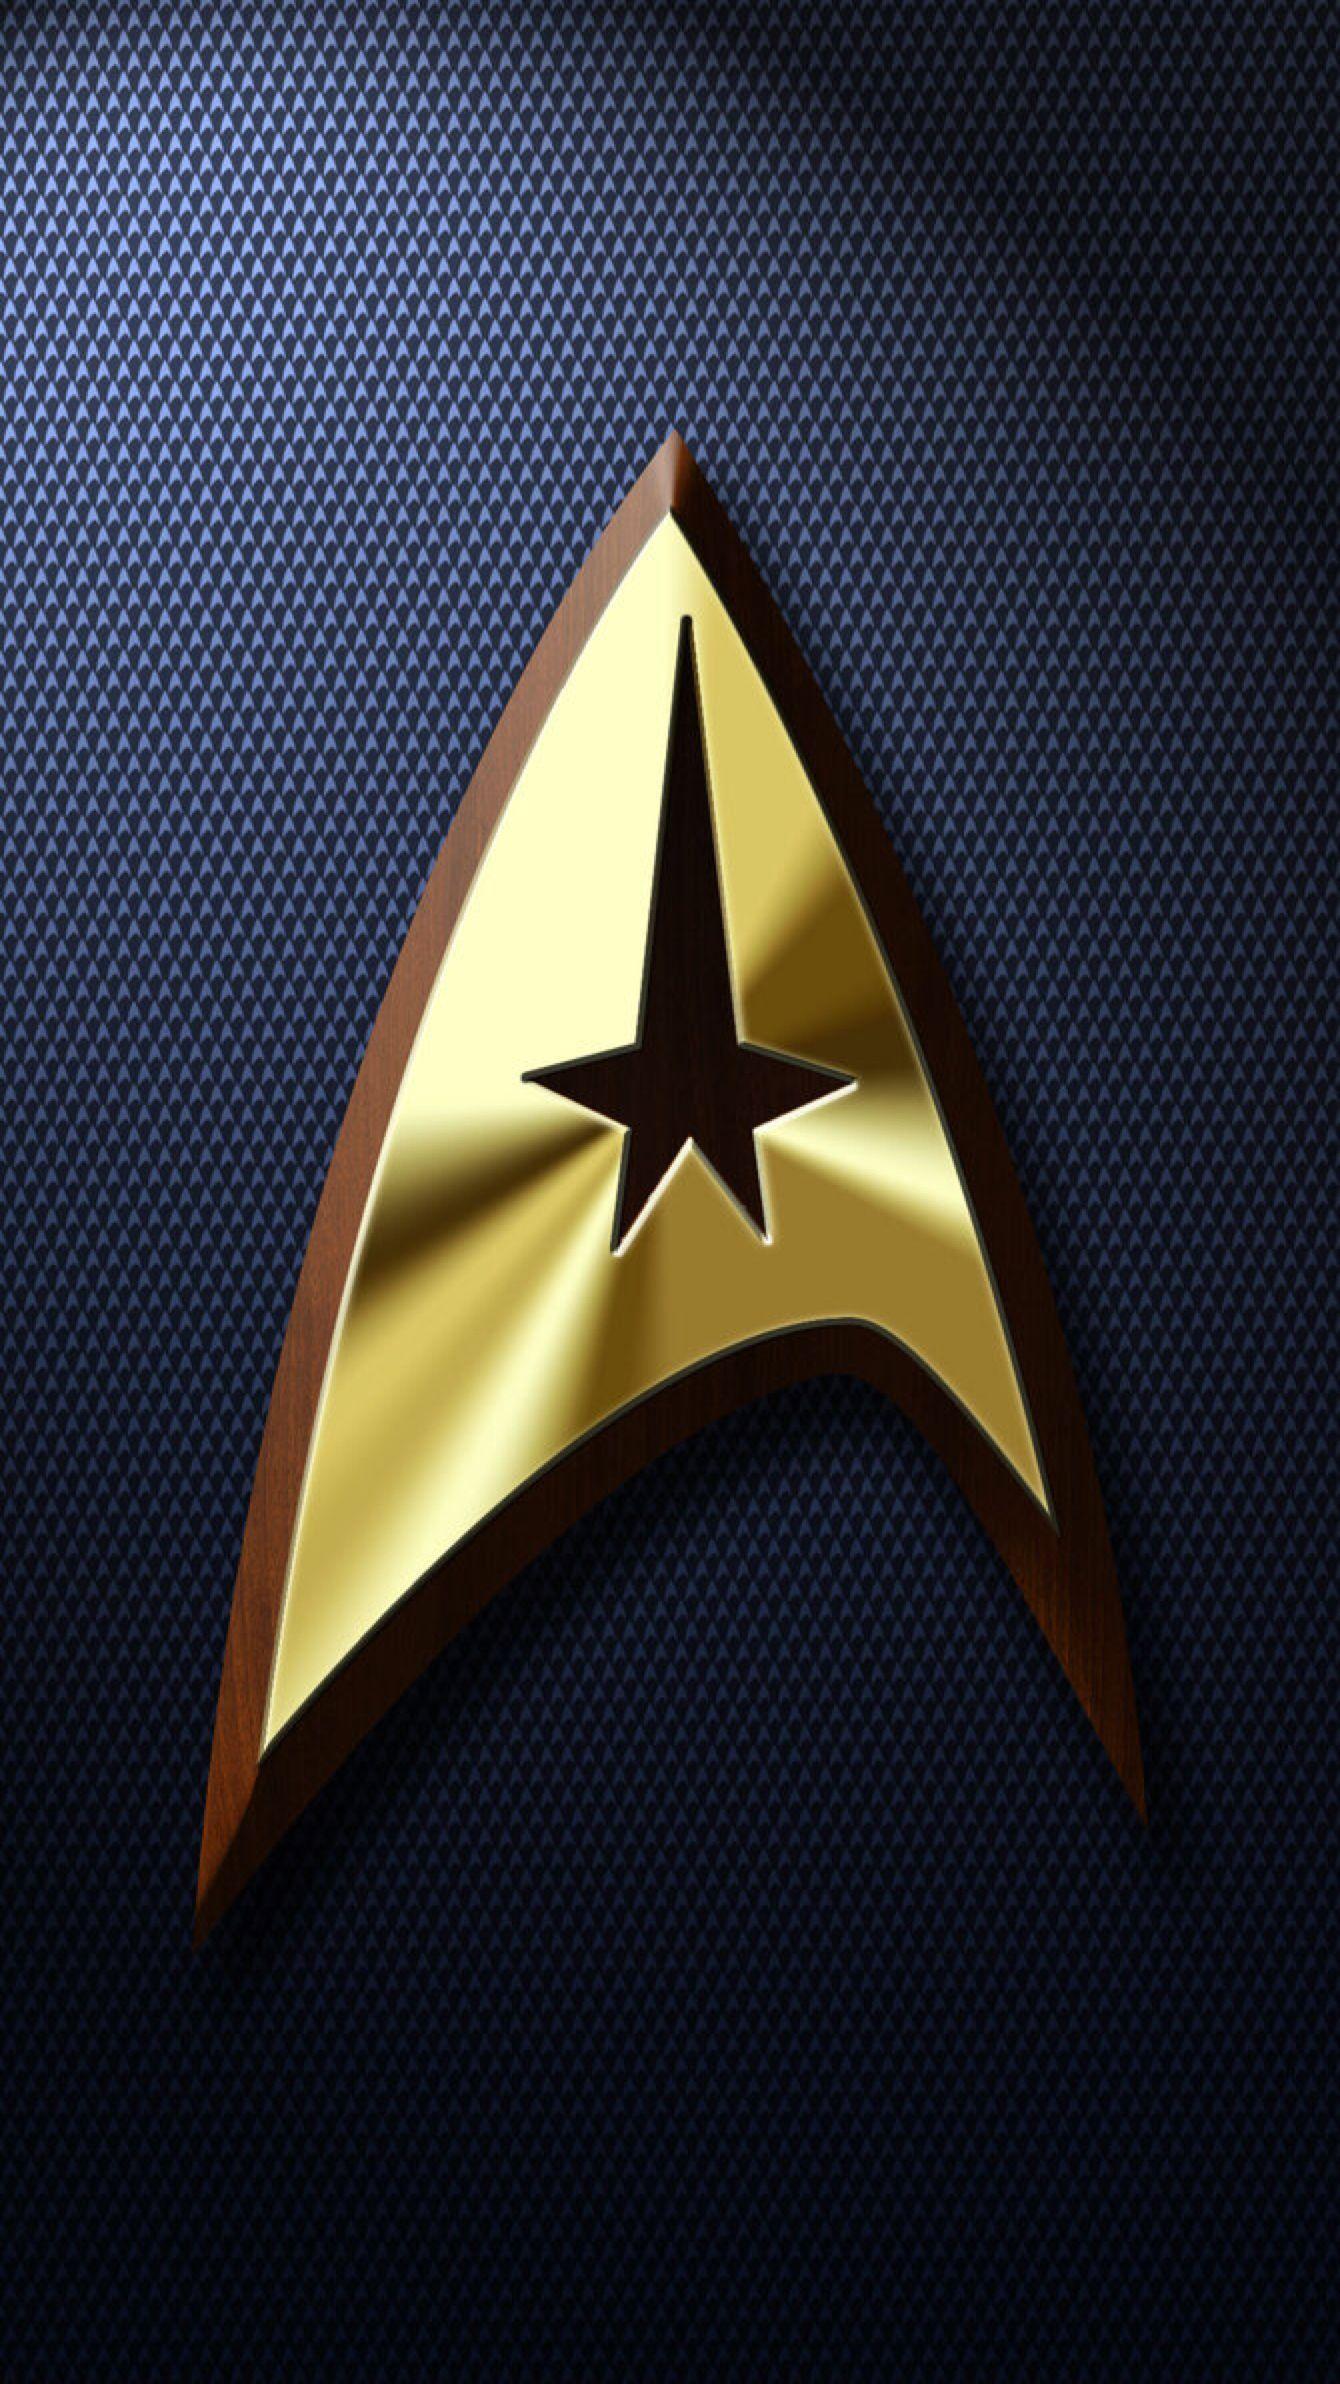 Star Trek Communicator Iphone Wallpapers Top Free Star Trek Communicator Iphone Backgrounds Wallpaperaccess